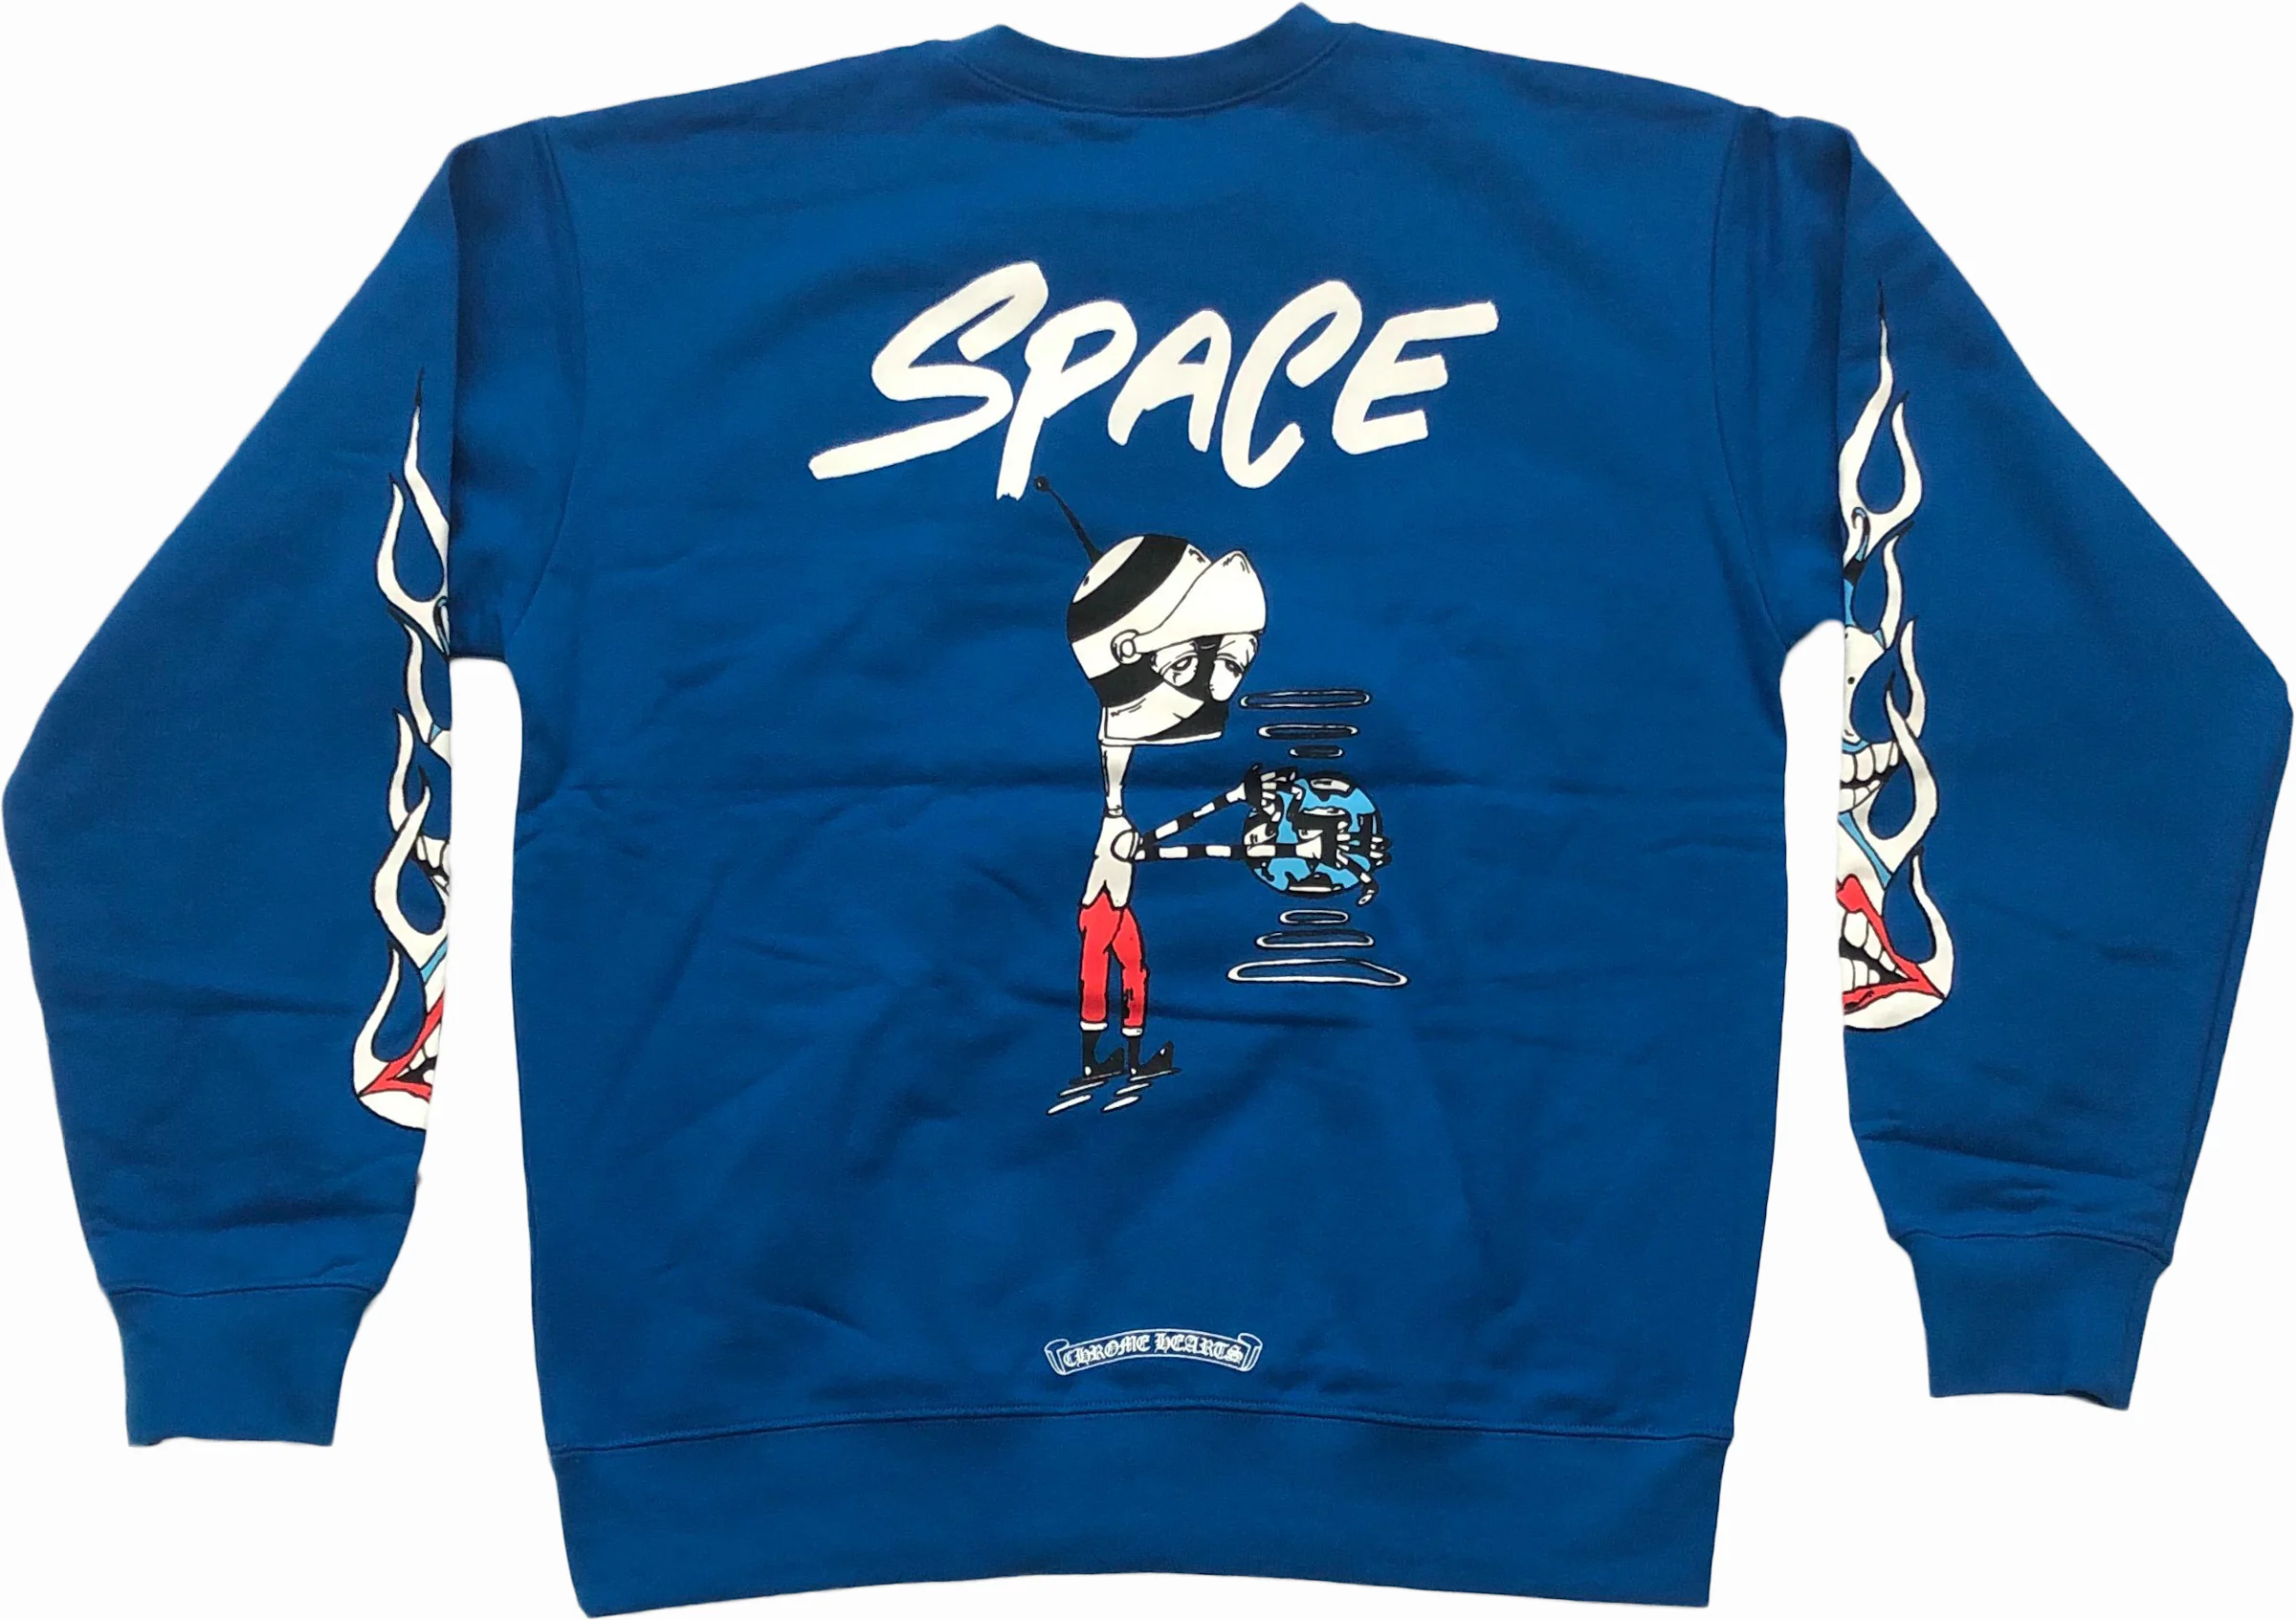 Chrome Hearts Matty Boy Space Crewneck Sweatshirt Blue Men's